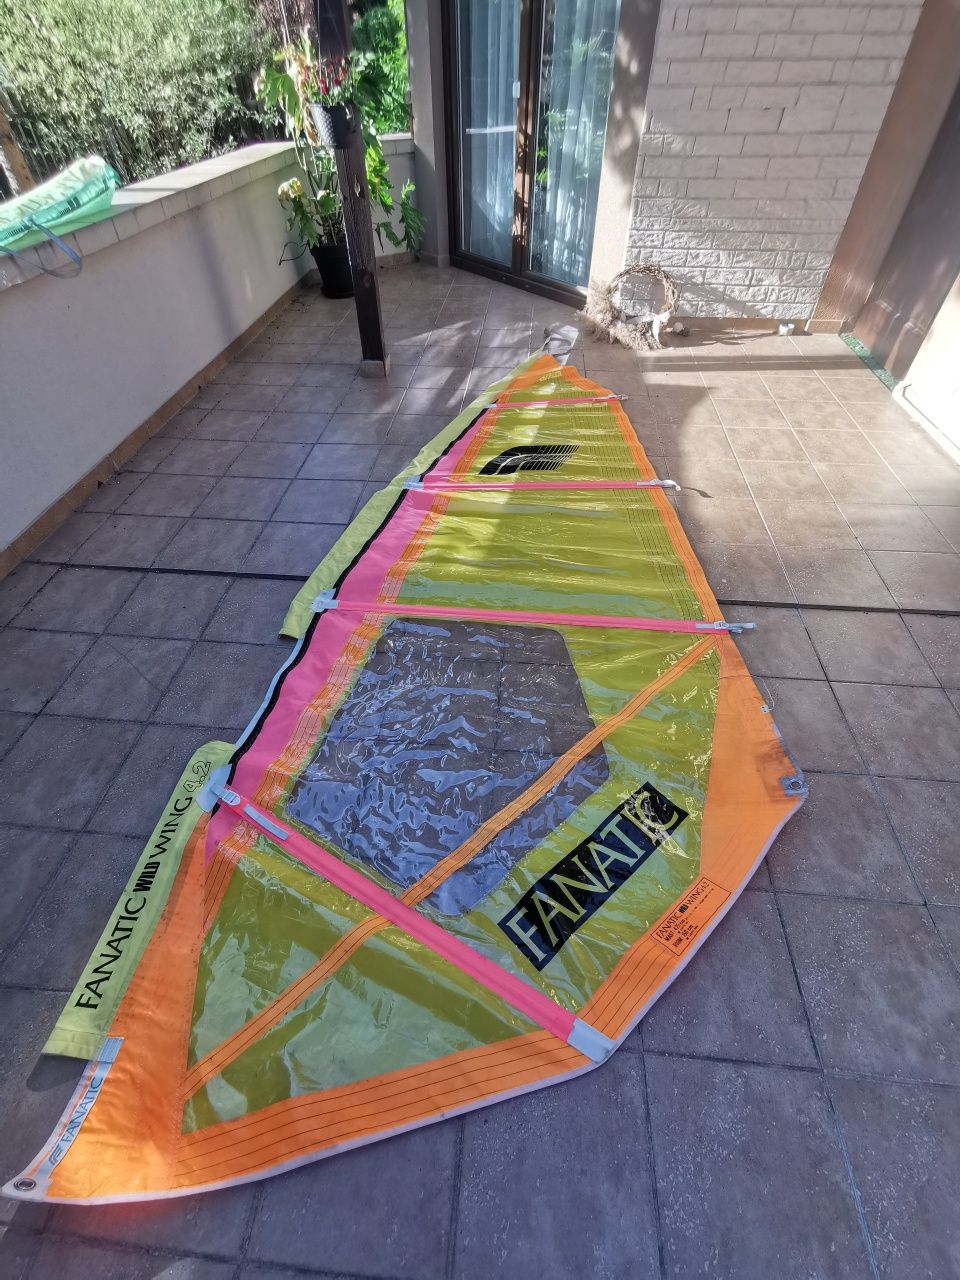 ZESTAW windsurfing deska żagle Duży